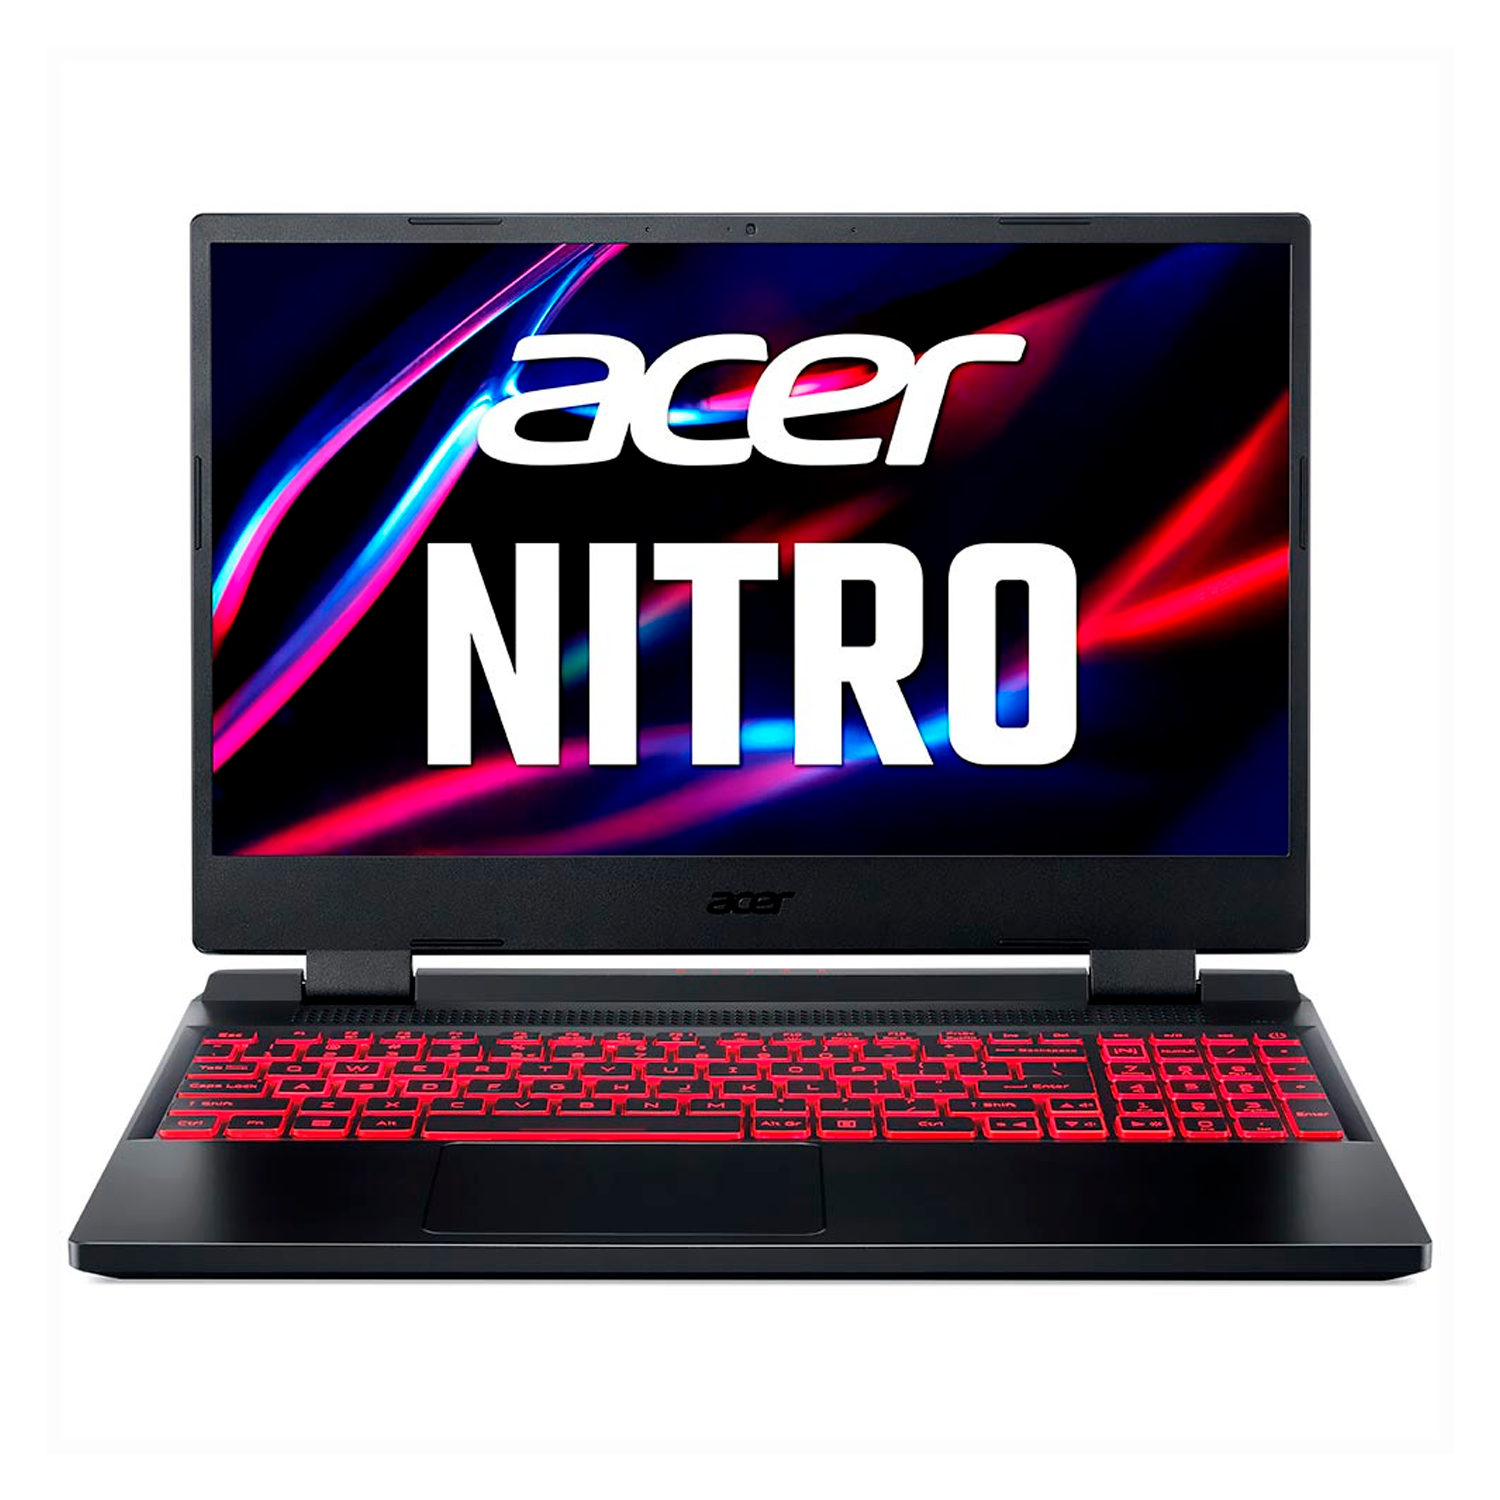 Notebook Acer Nitro 5 AN515-58-76ND 15.6" Intel Core I7-12700H 512GB SSD 6GB RAM RTX3060 6G - Preto